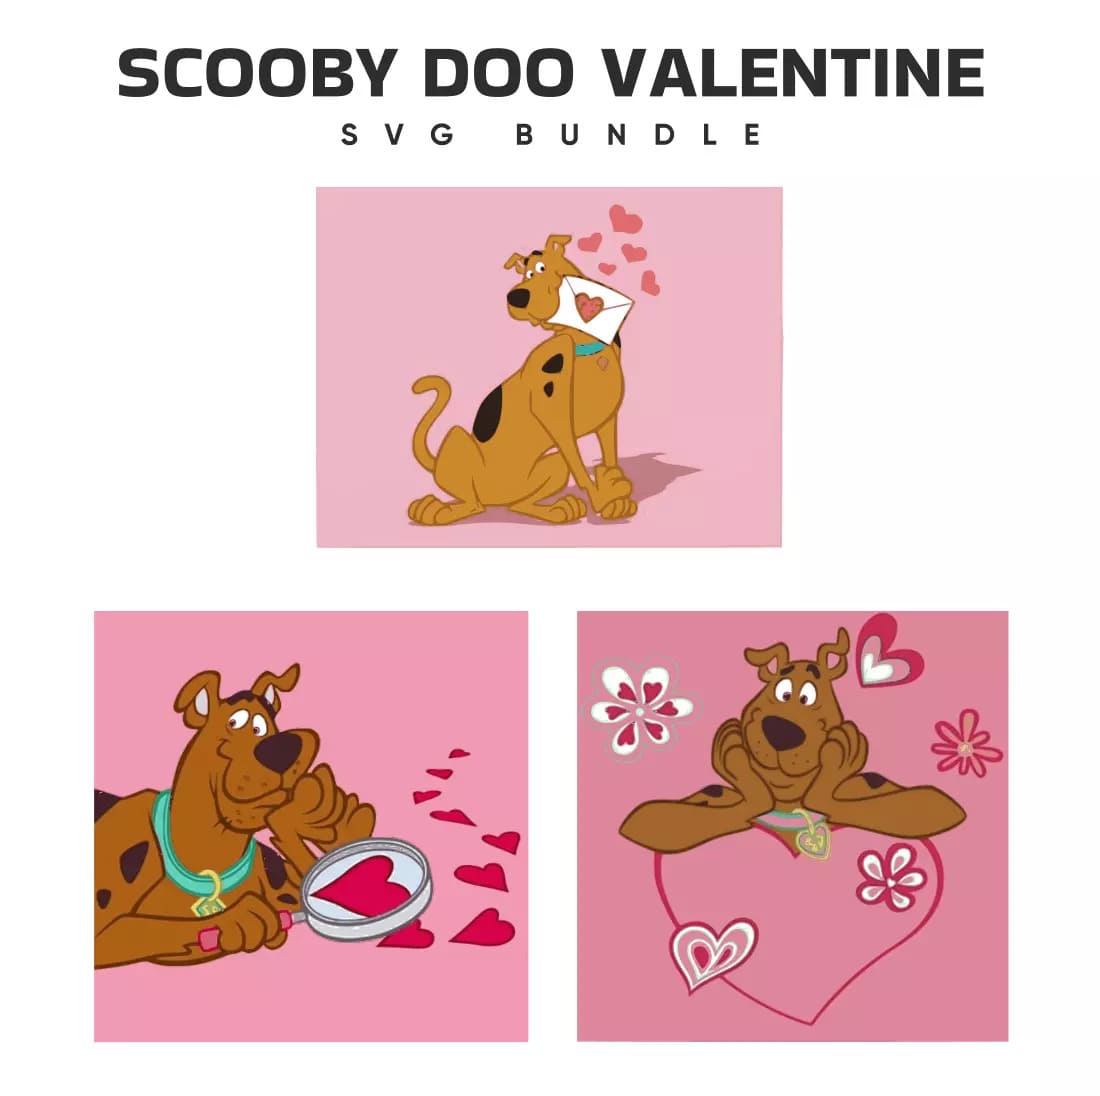 Scooby Doo Valentine SVG Bundle Preview.